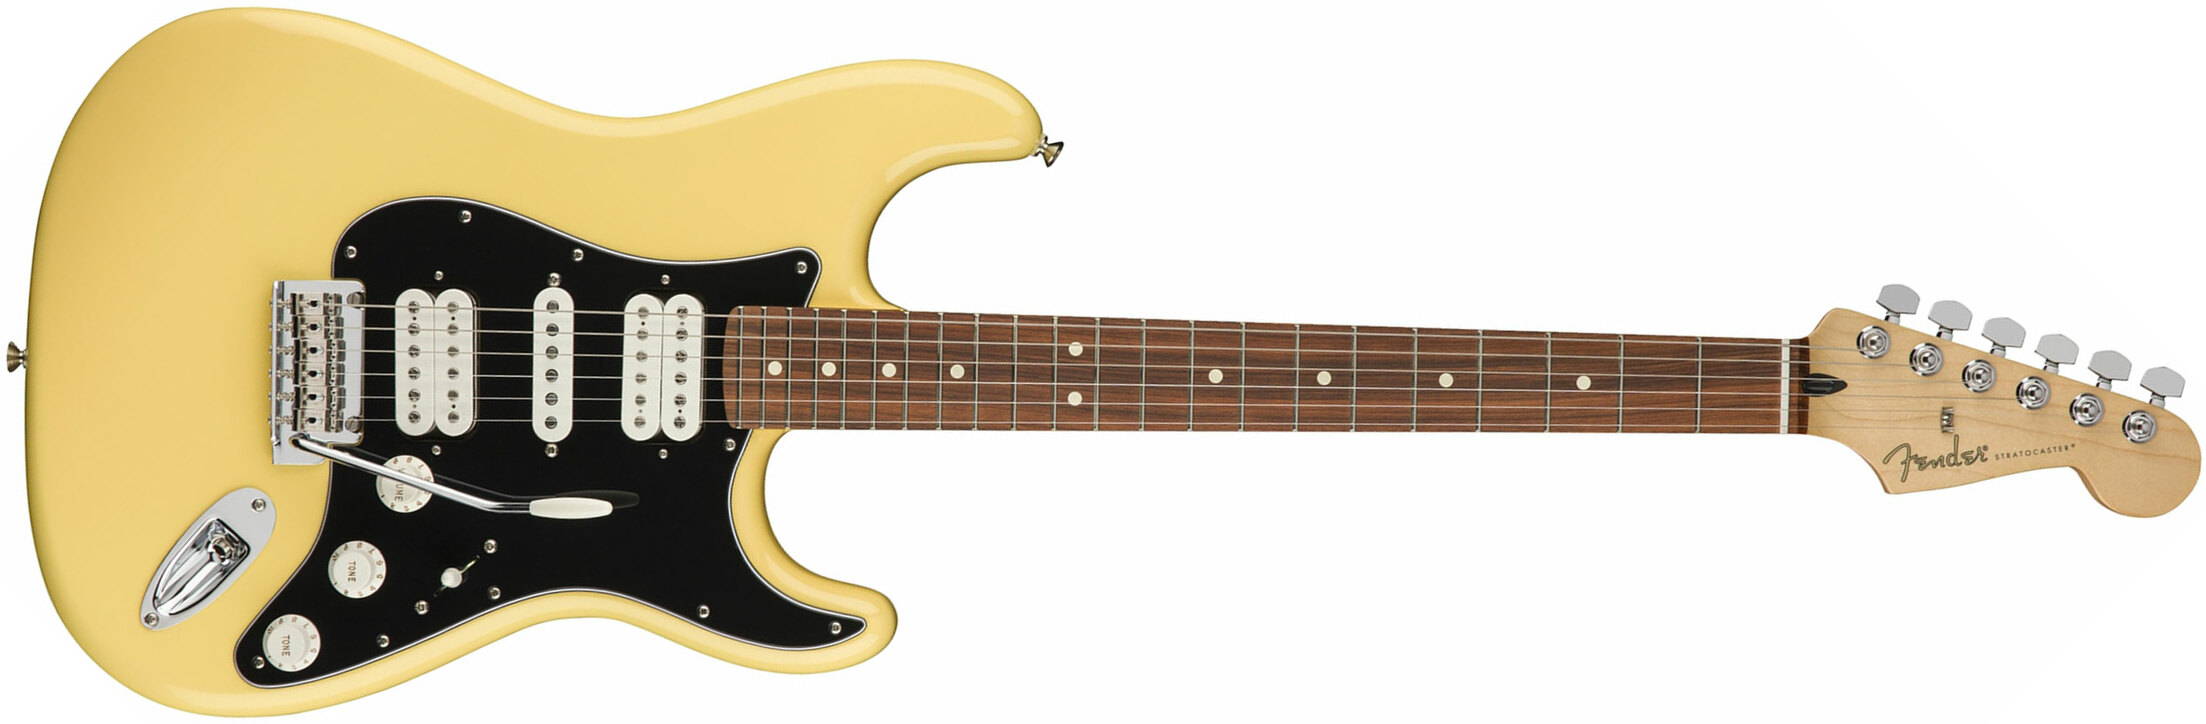 Fender Strat Player Mex Hsh Pf - Buttercream - Str shape electric guitar - Main picture